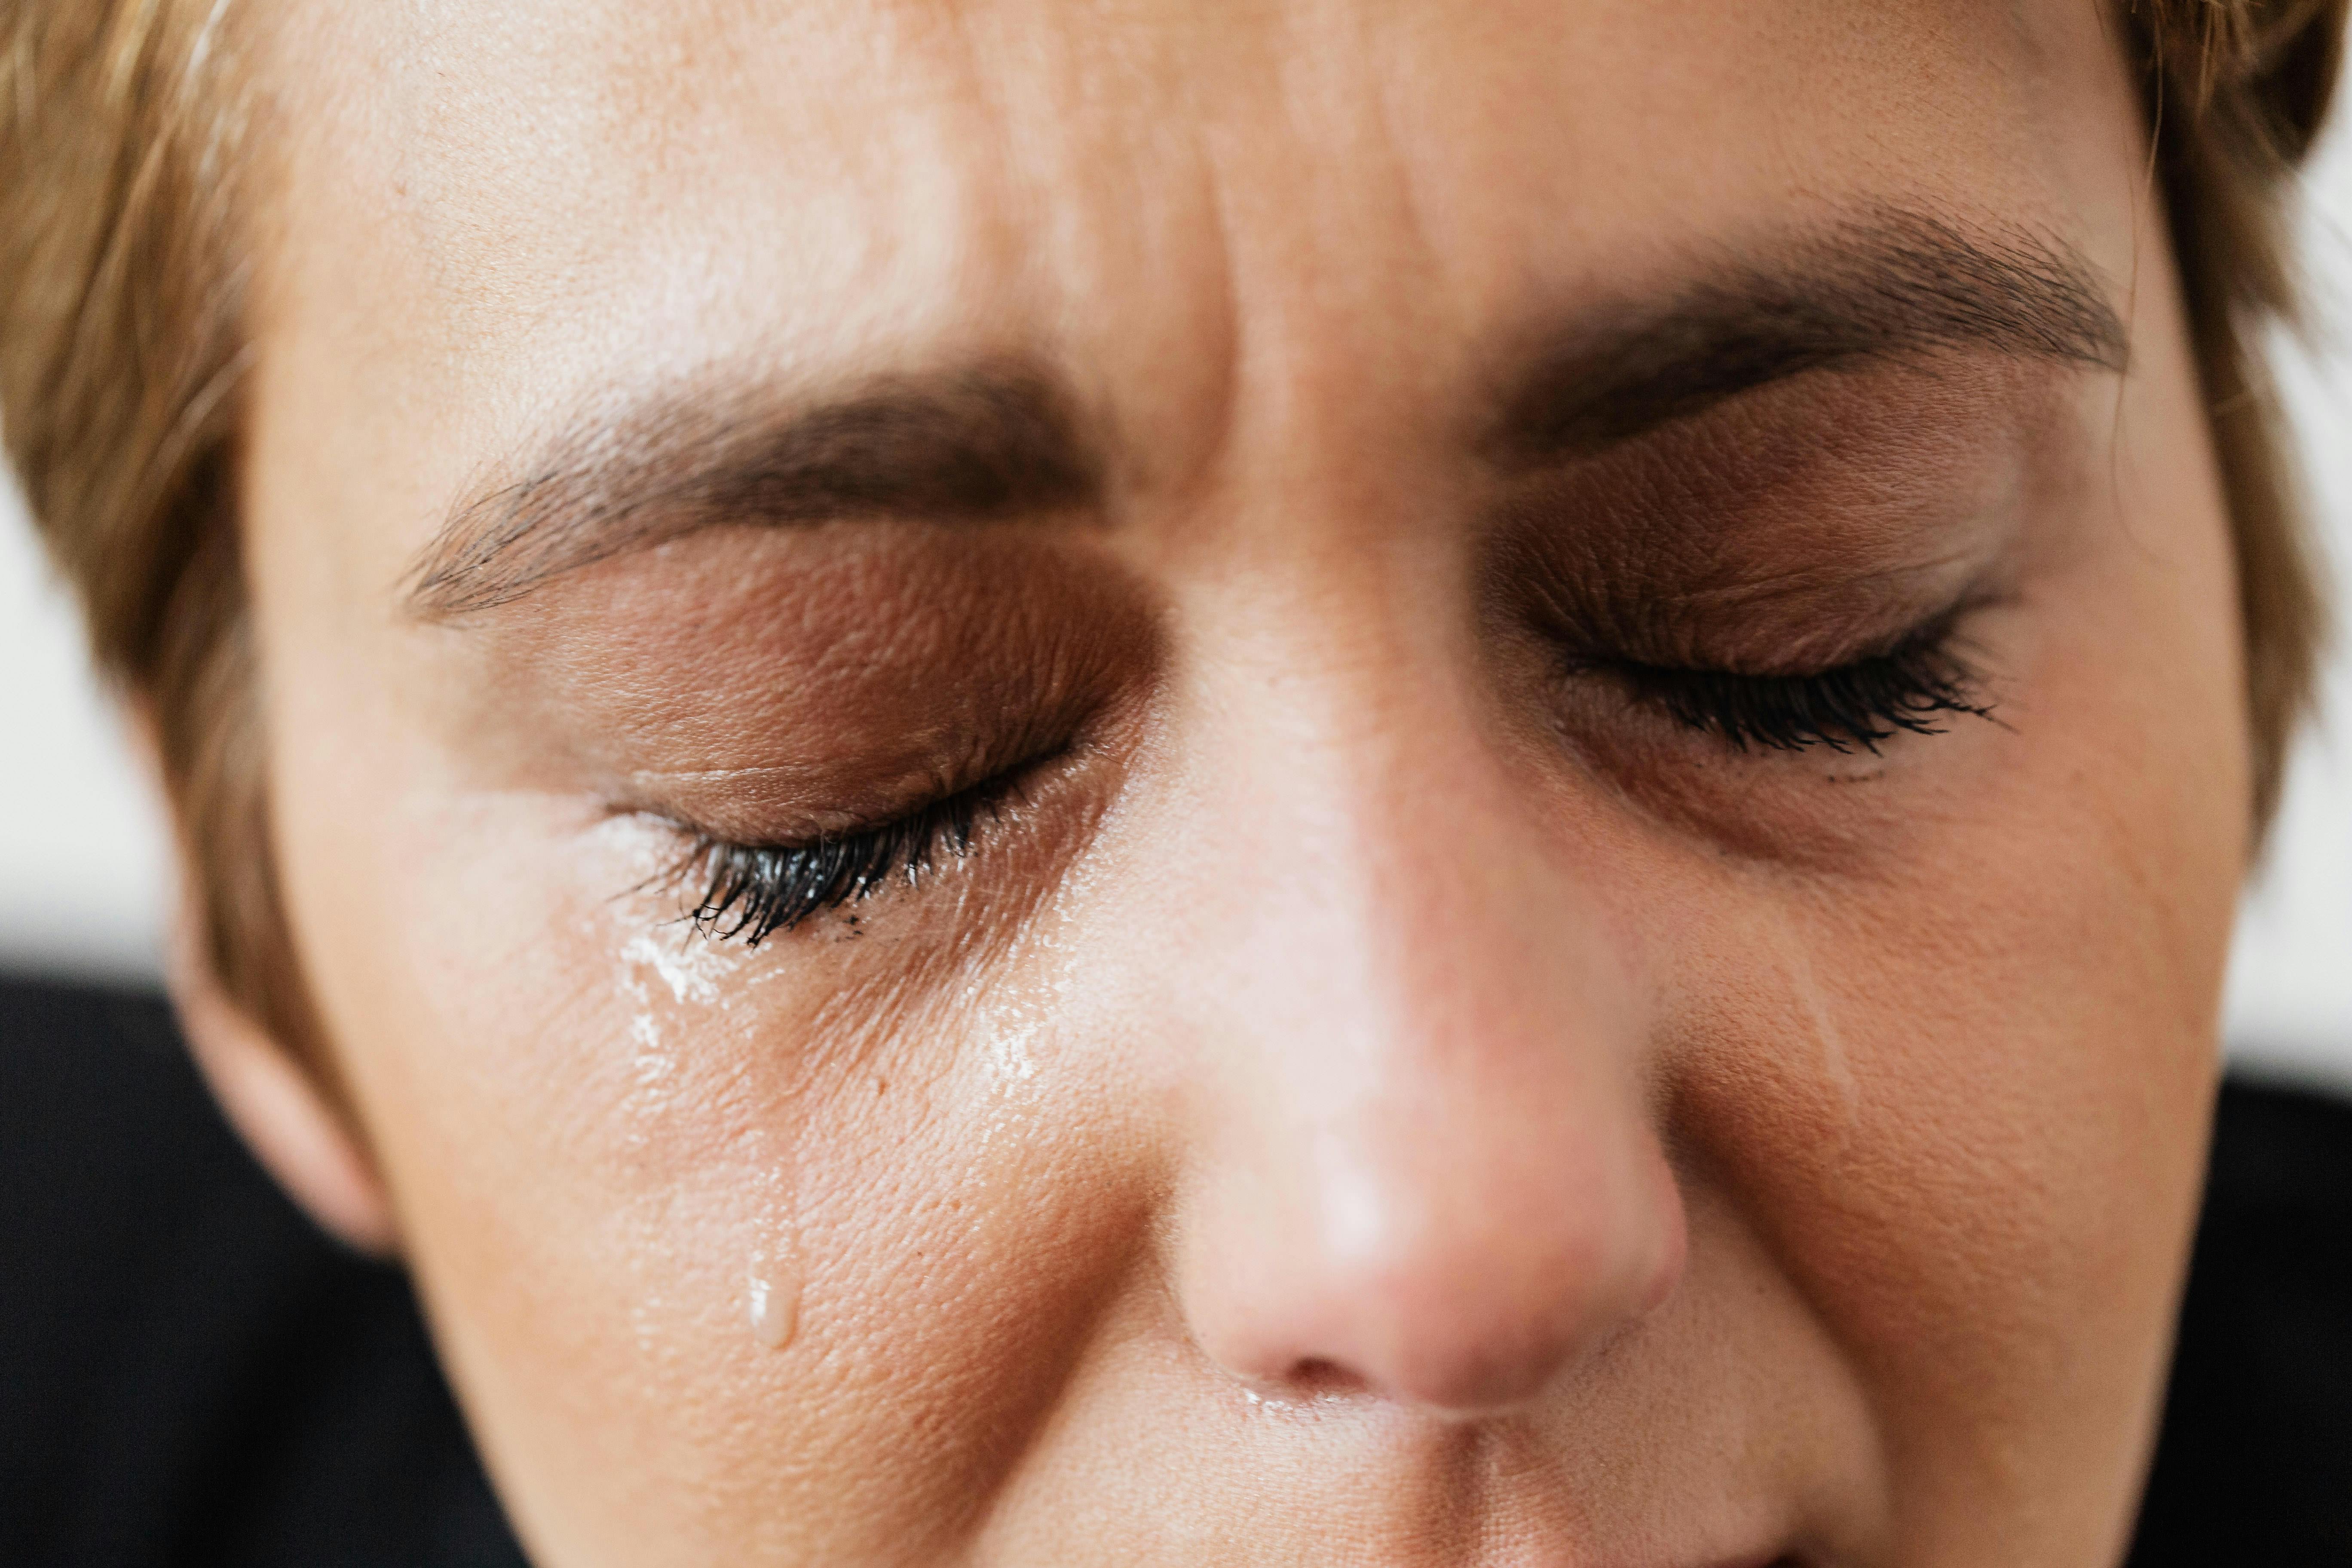 A woman in tears | Source: Pexels